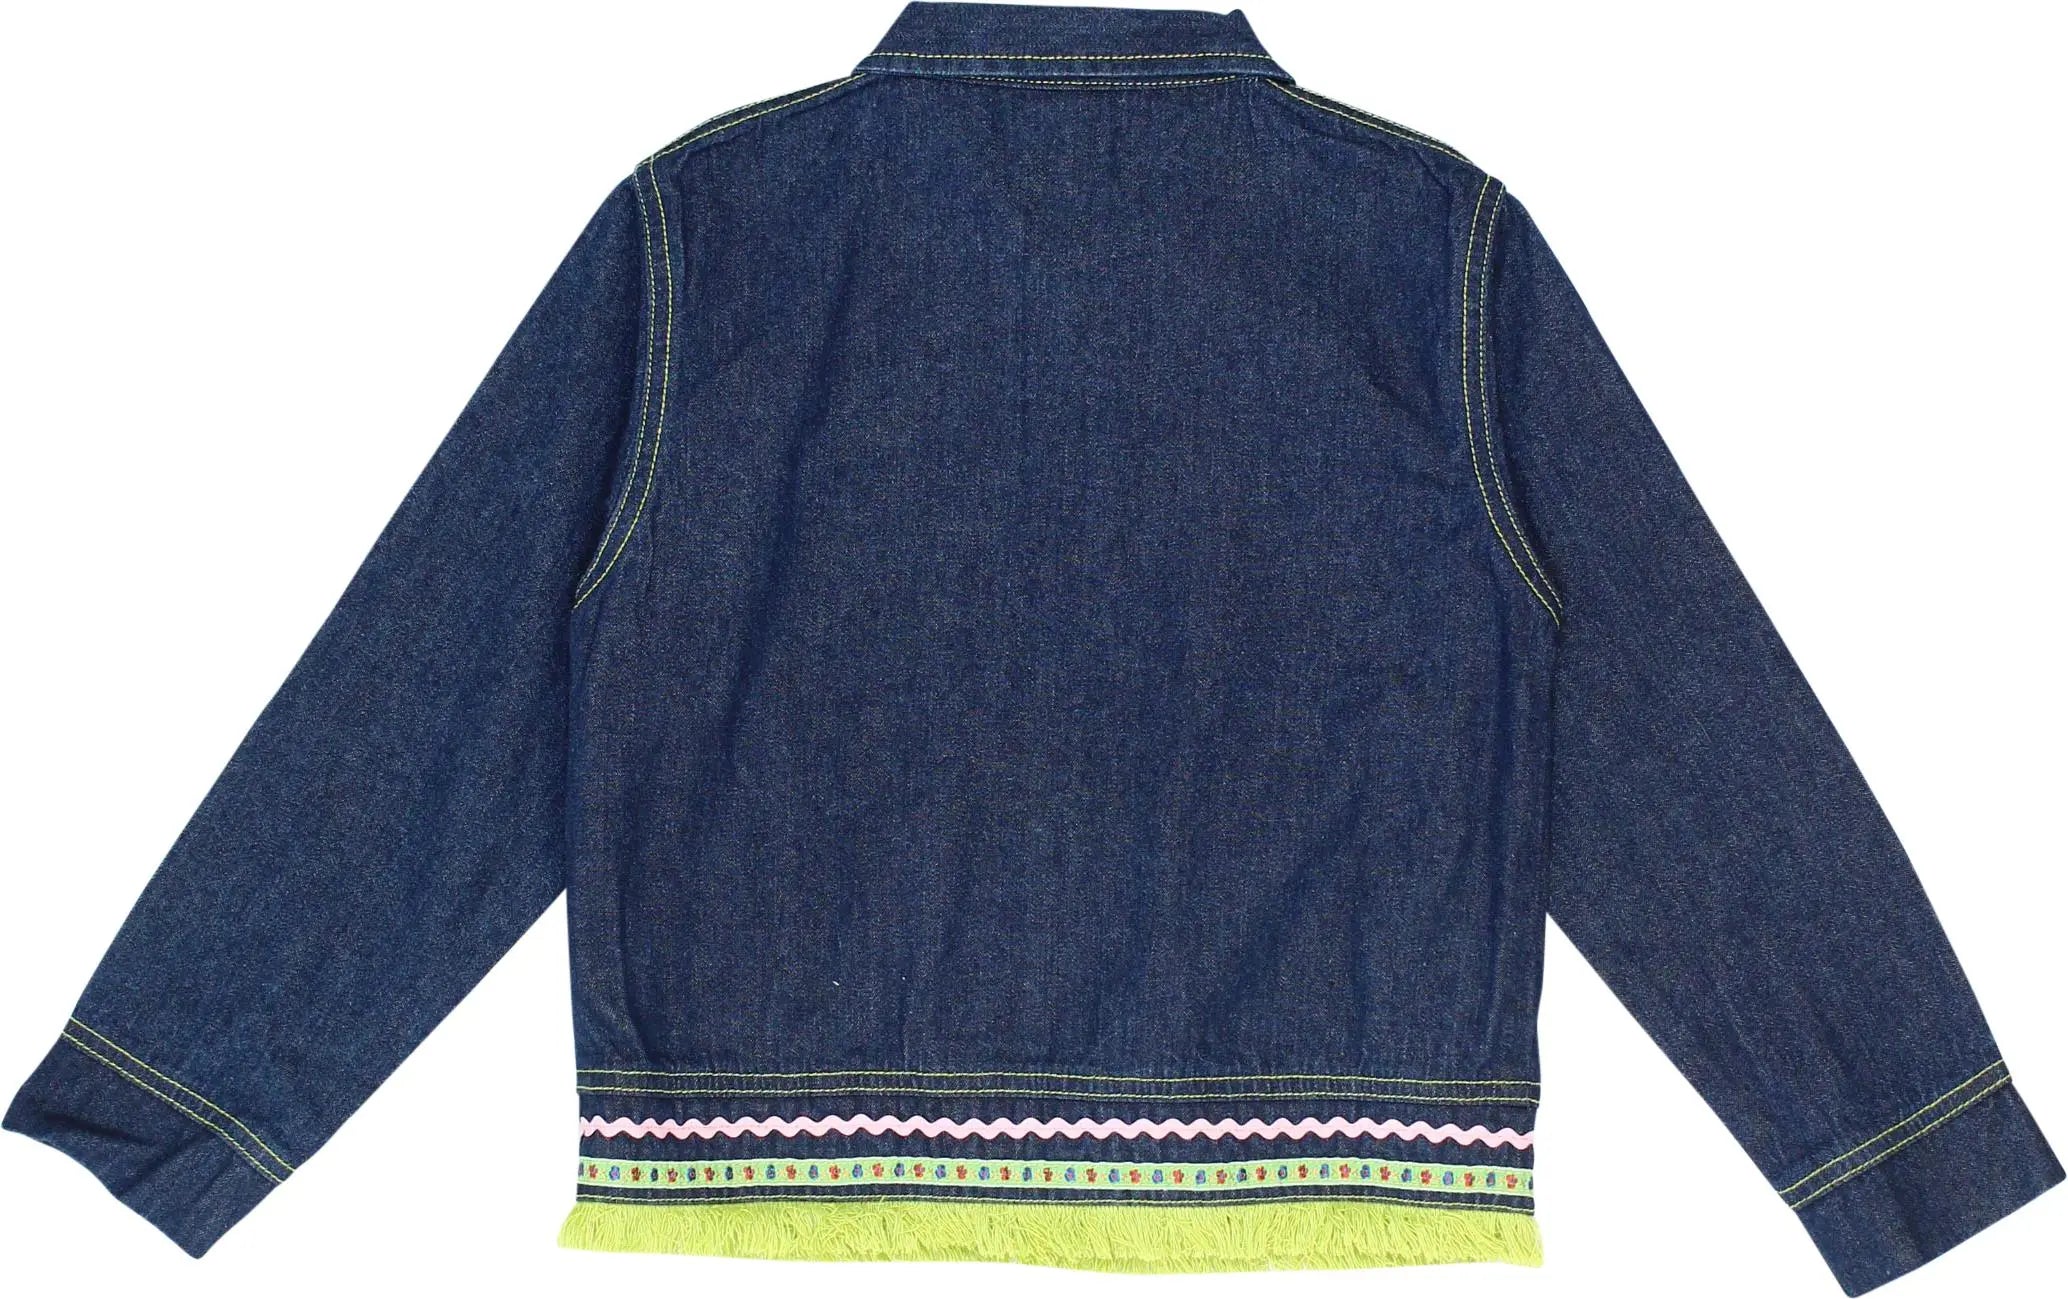 Bambino - Vintage Denim Jacket- ThriftTale.com - Vintage and second handclothing